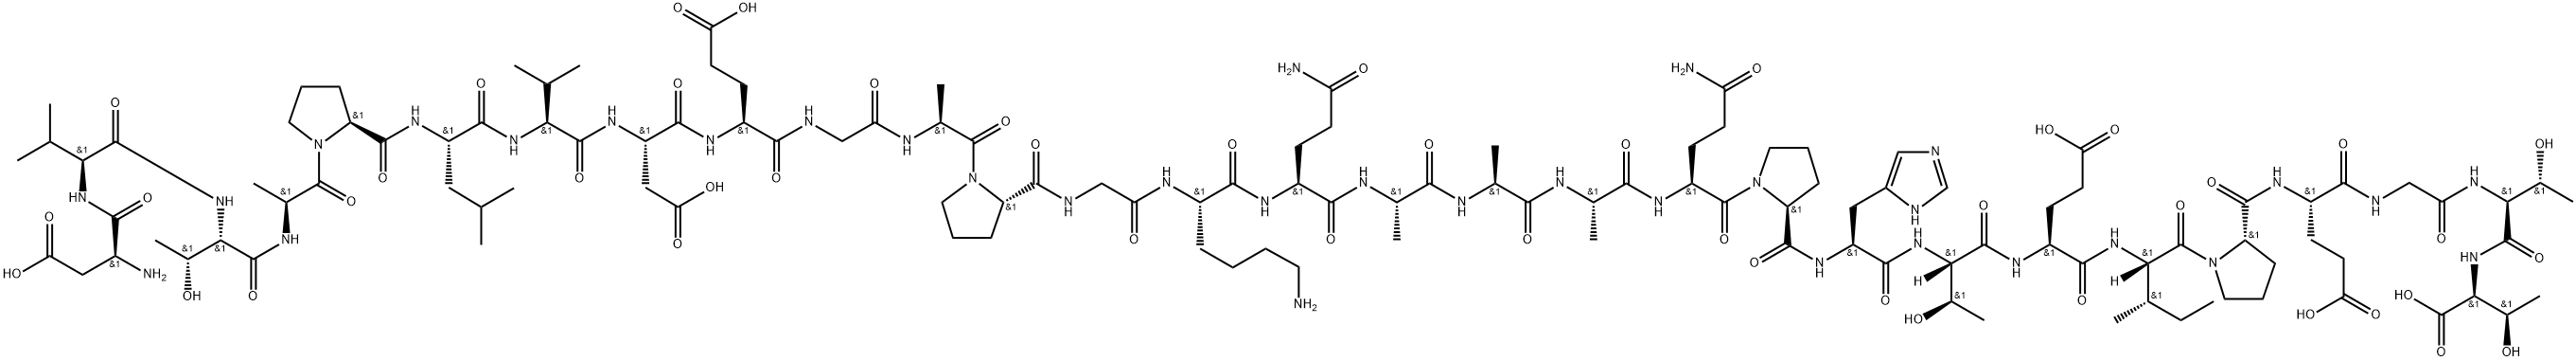 Tau Peptide (74-102) (Exon 3/Insert 2 Domain) Structure